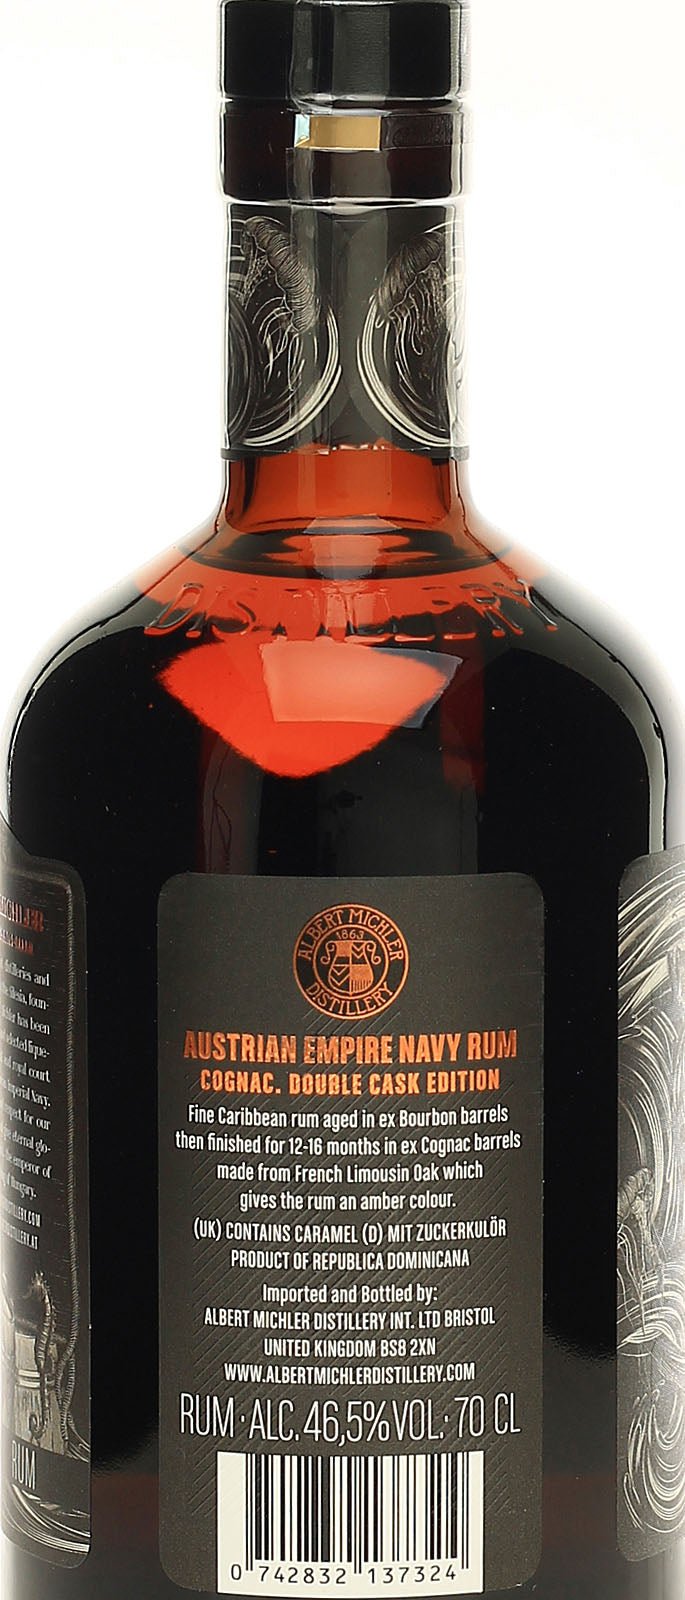 Austrian Empire Navy Rum Reserve Double Cask Cognac 0,7L -GB- 46,5% - AllSpirits